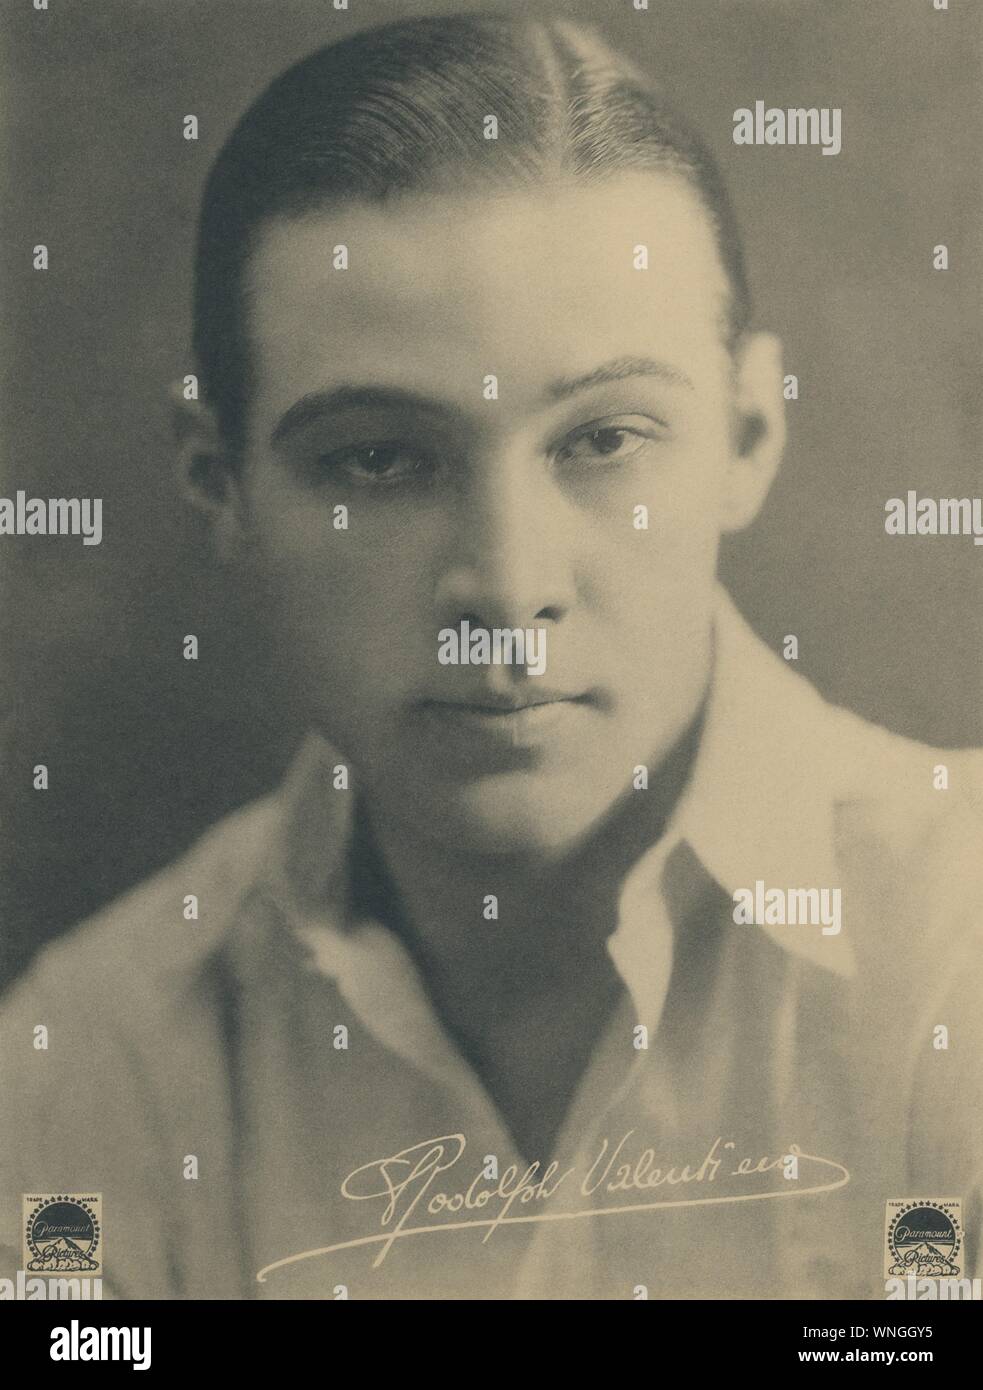 Rudolph Valentino 1895 - 1926 Paramount Pictures Stock Photo